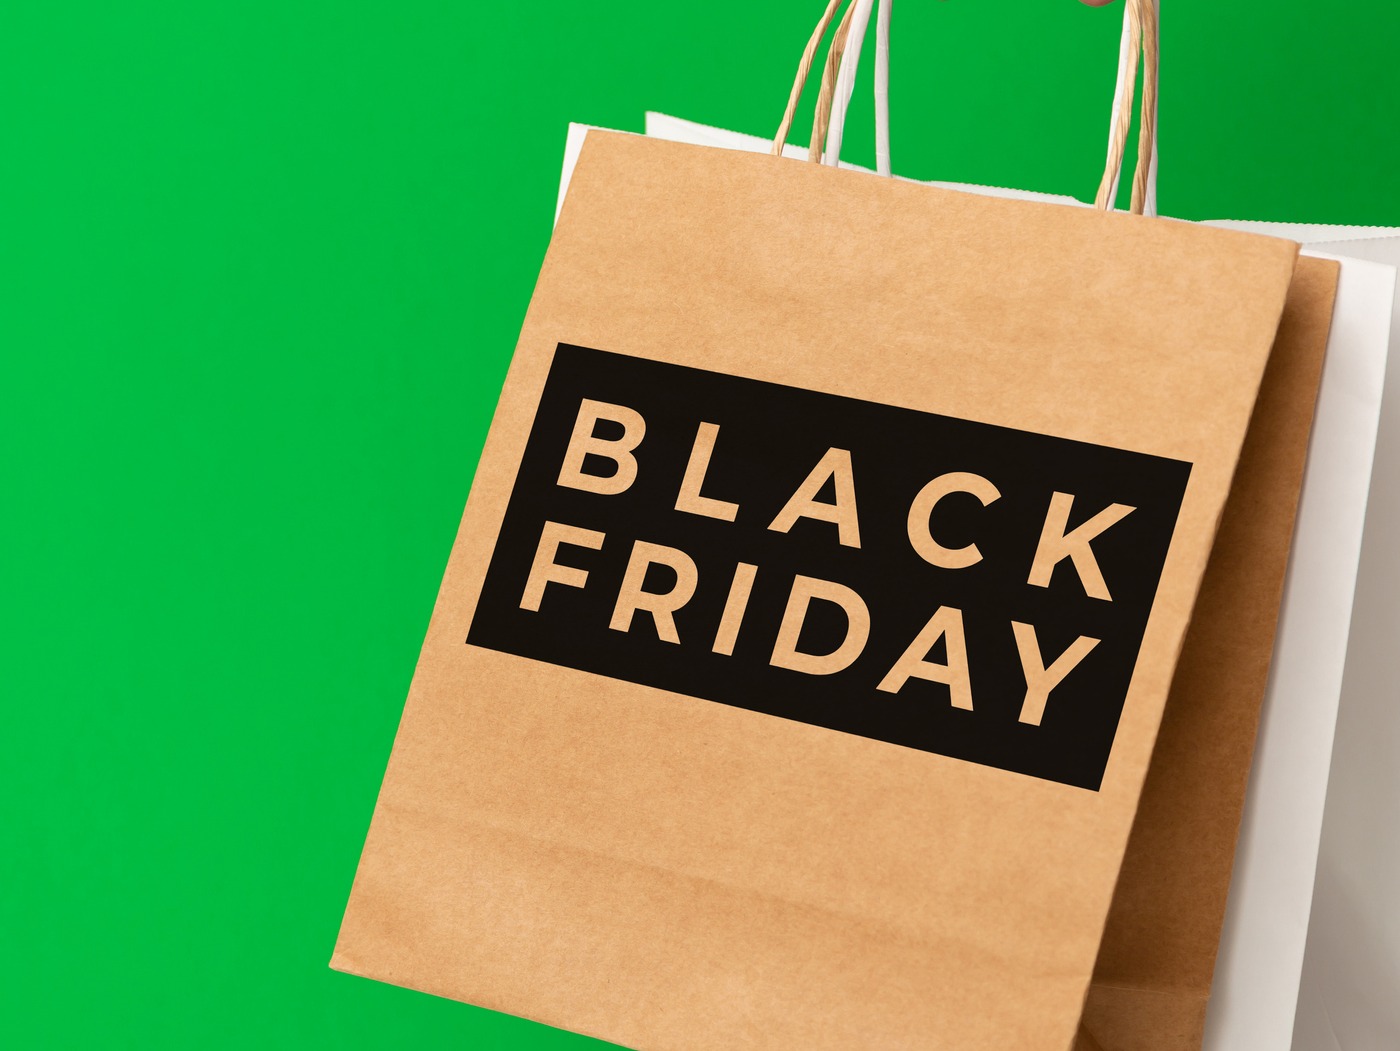 Imagen de fondo verde, bolsa de papel que dice: Black Friday